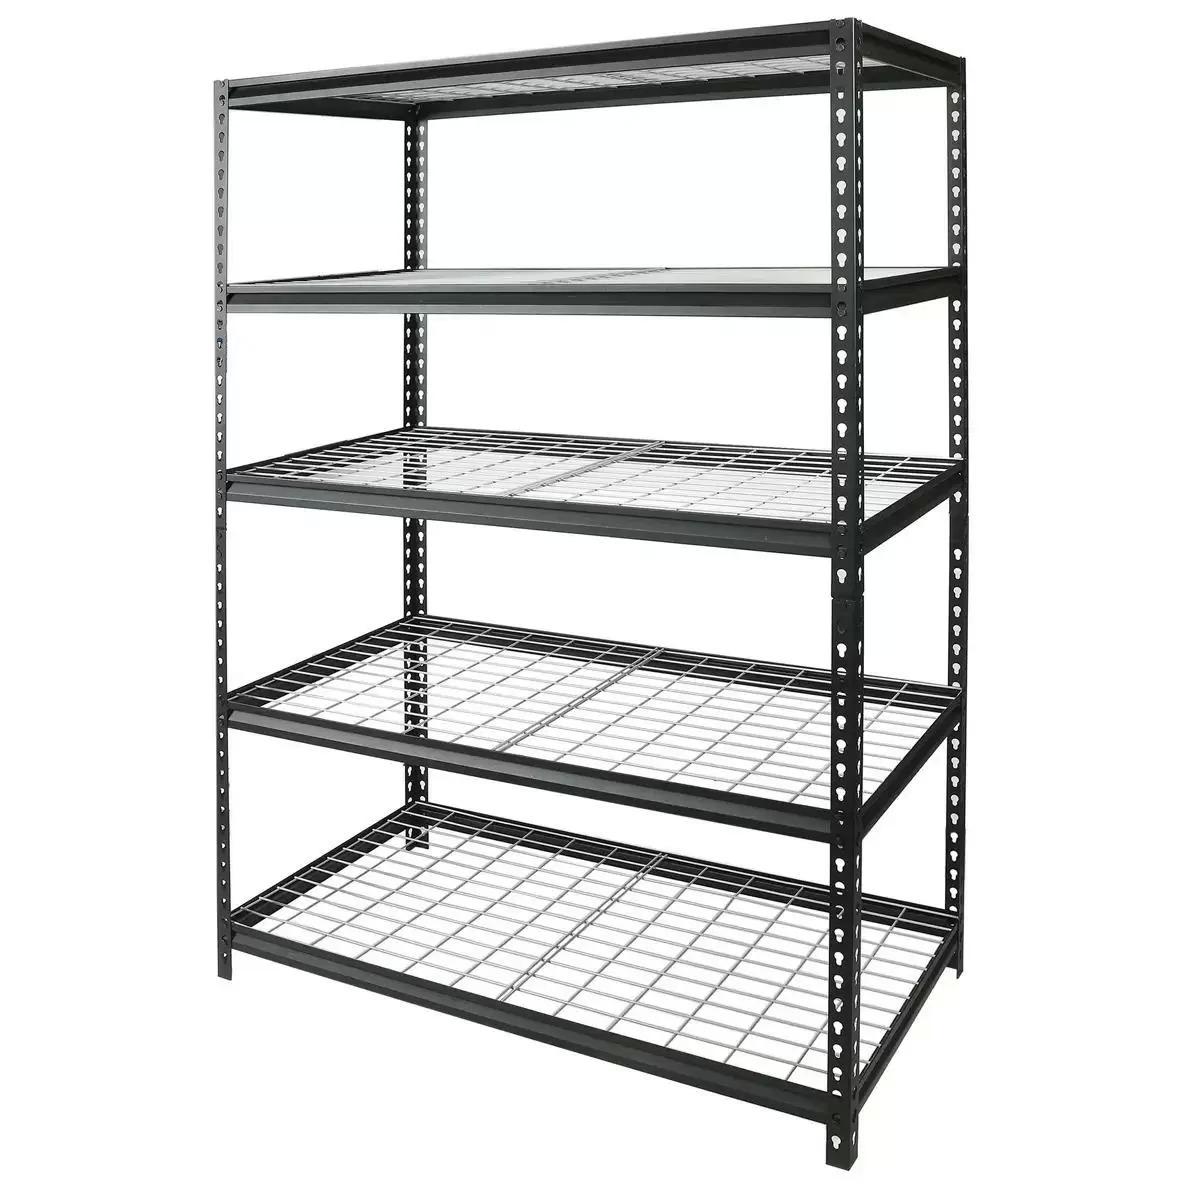 Workpro Freestanding Shelves for $101 Shipped